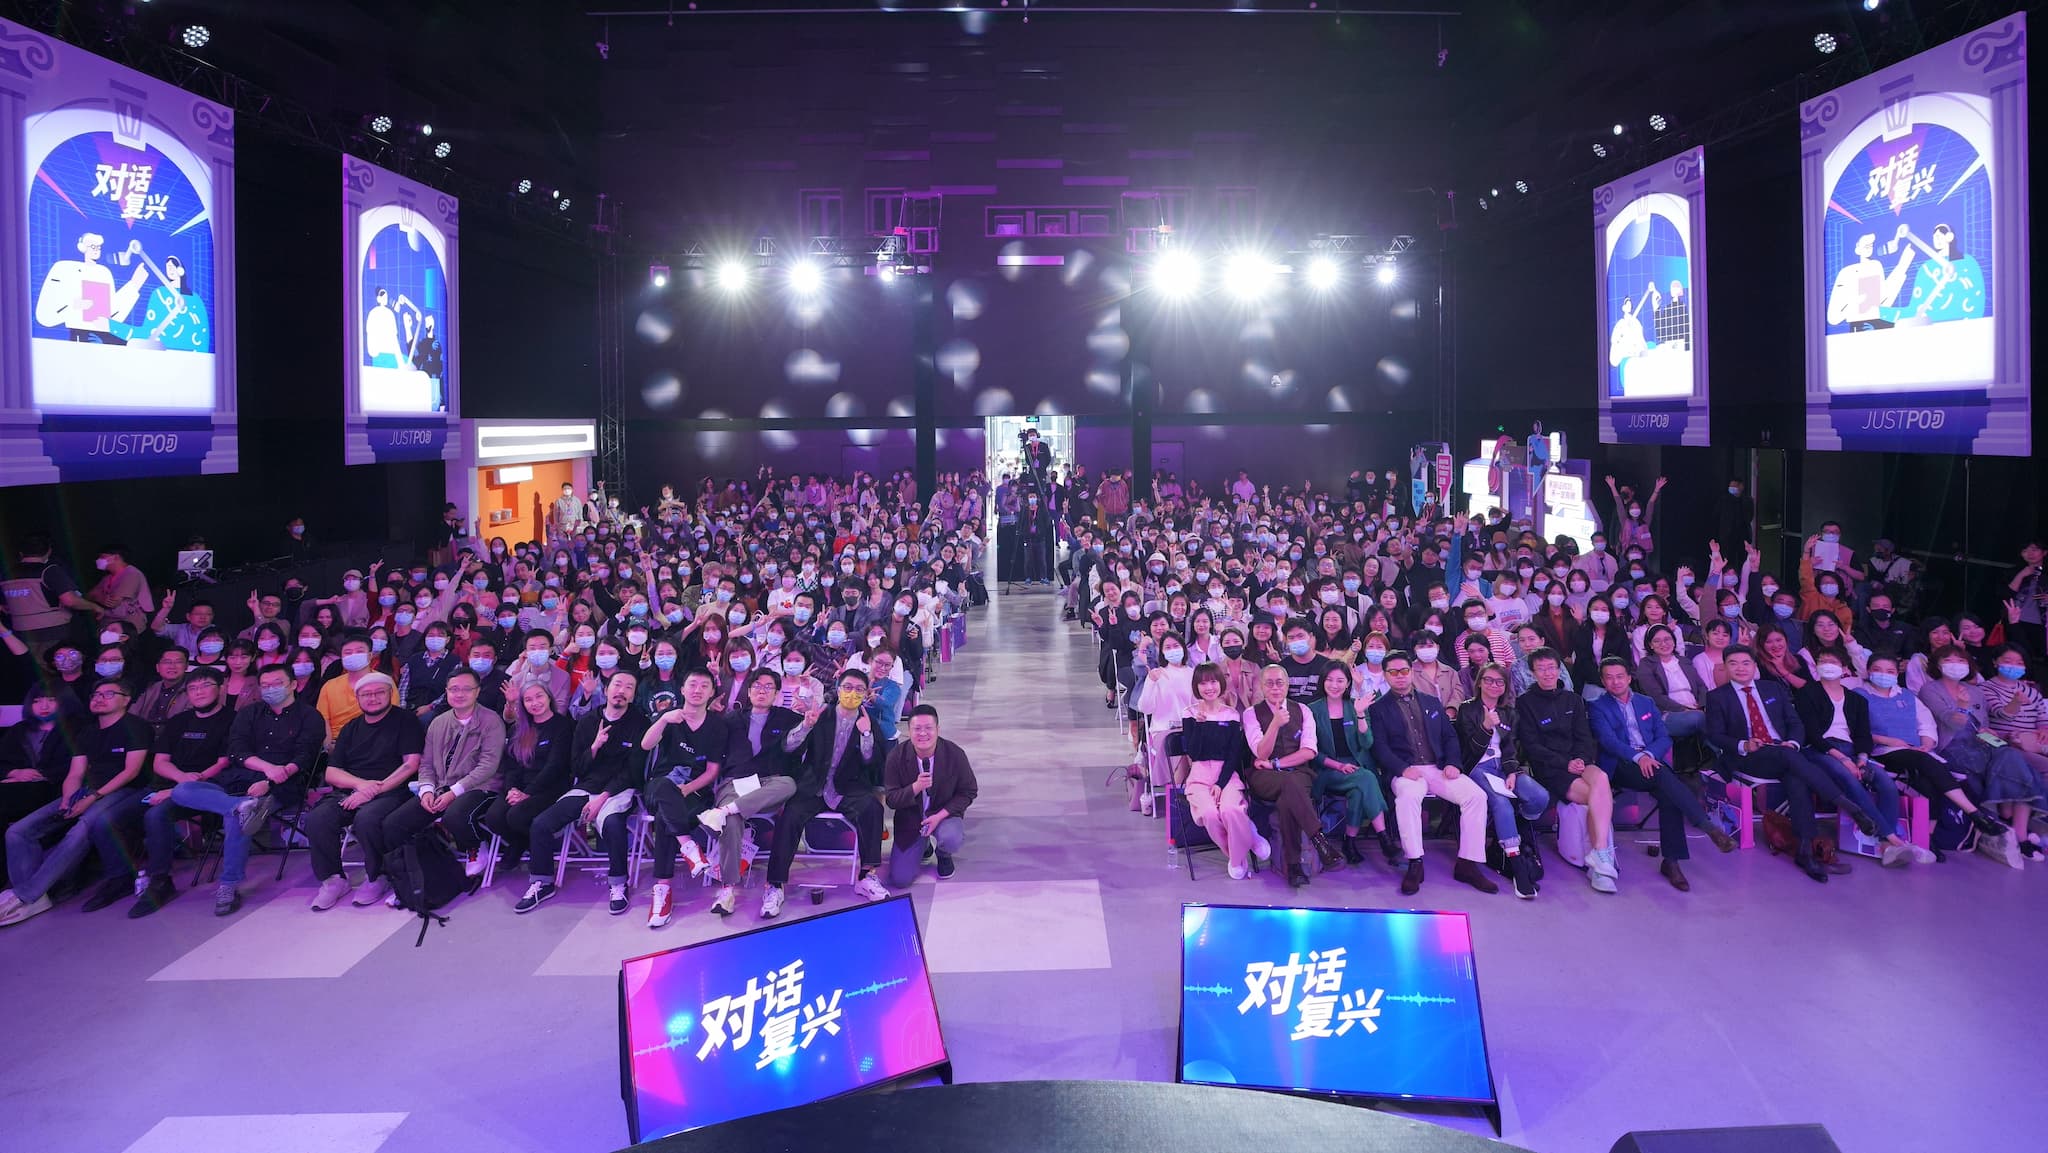 PodFest China audience